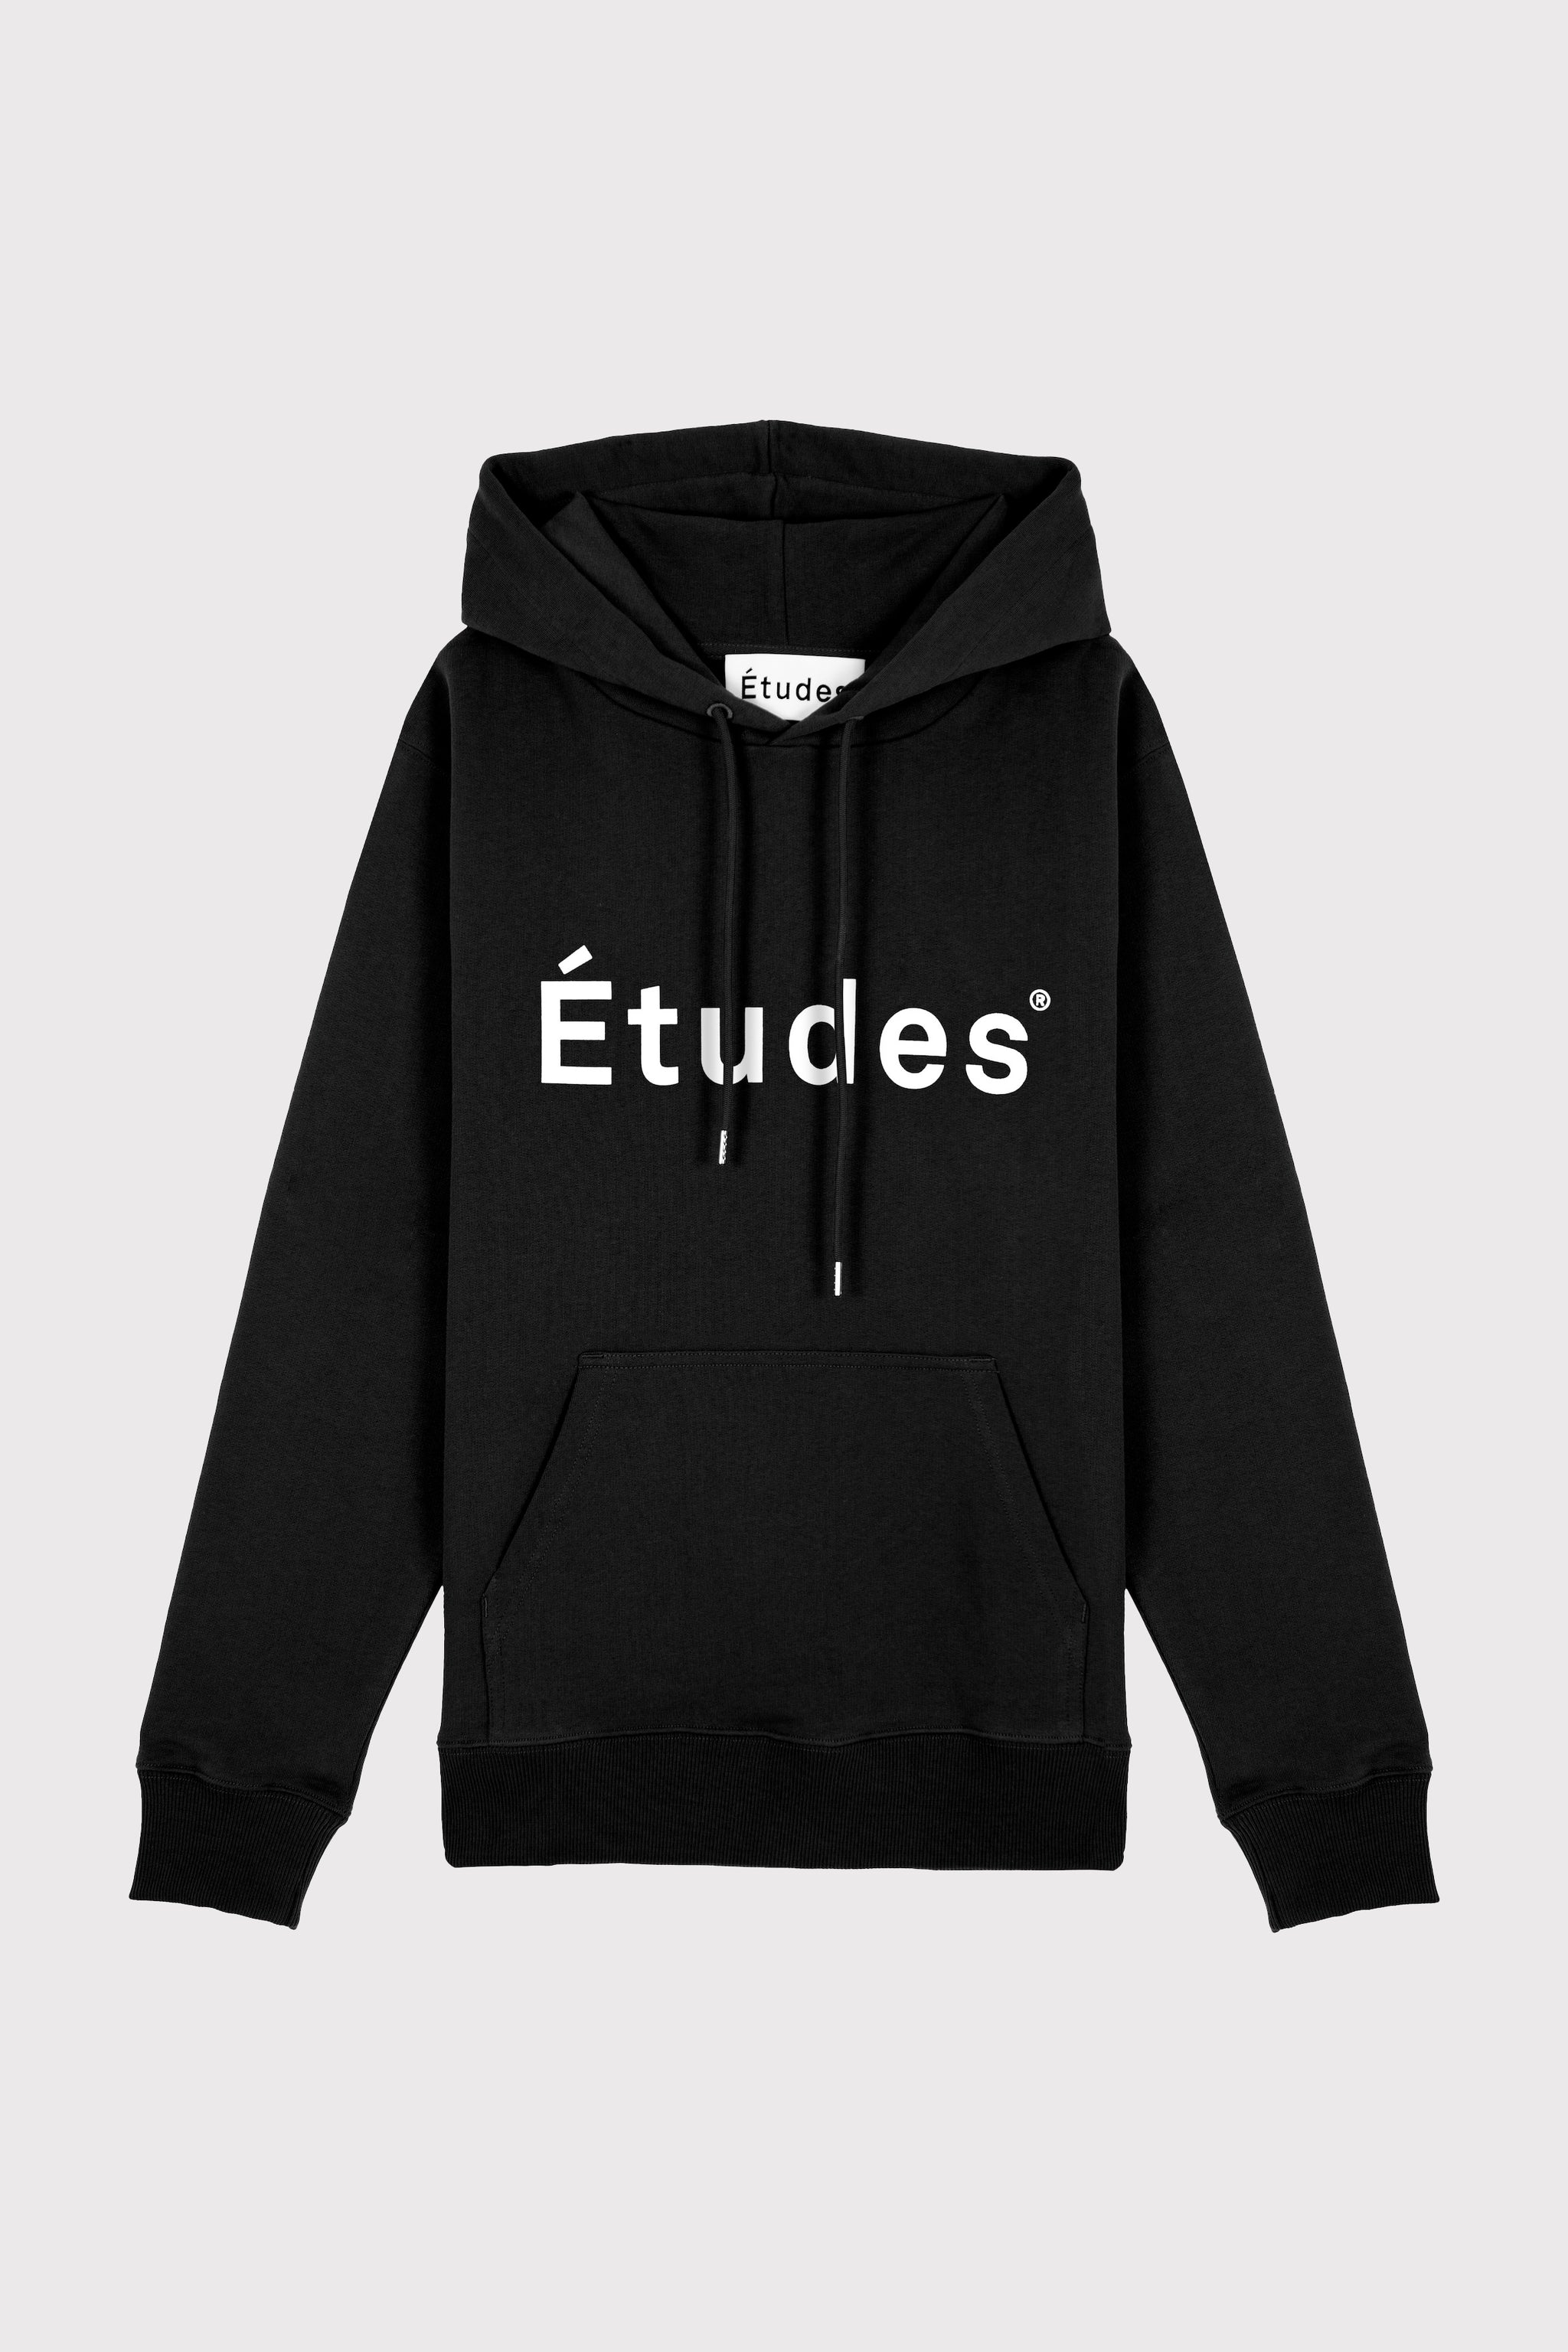 Études HOODIE ETUDES BLACK sweatshirt 2